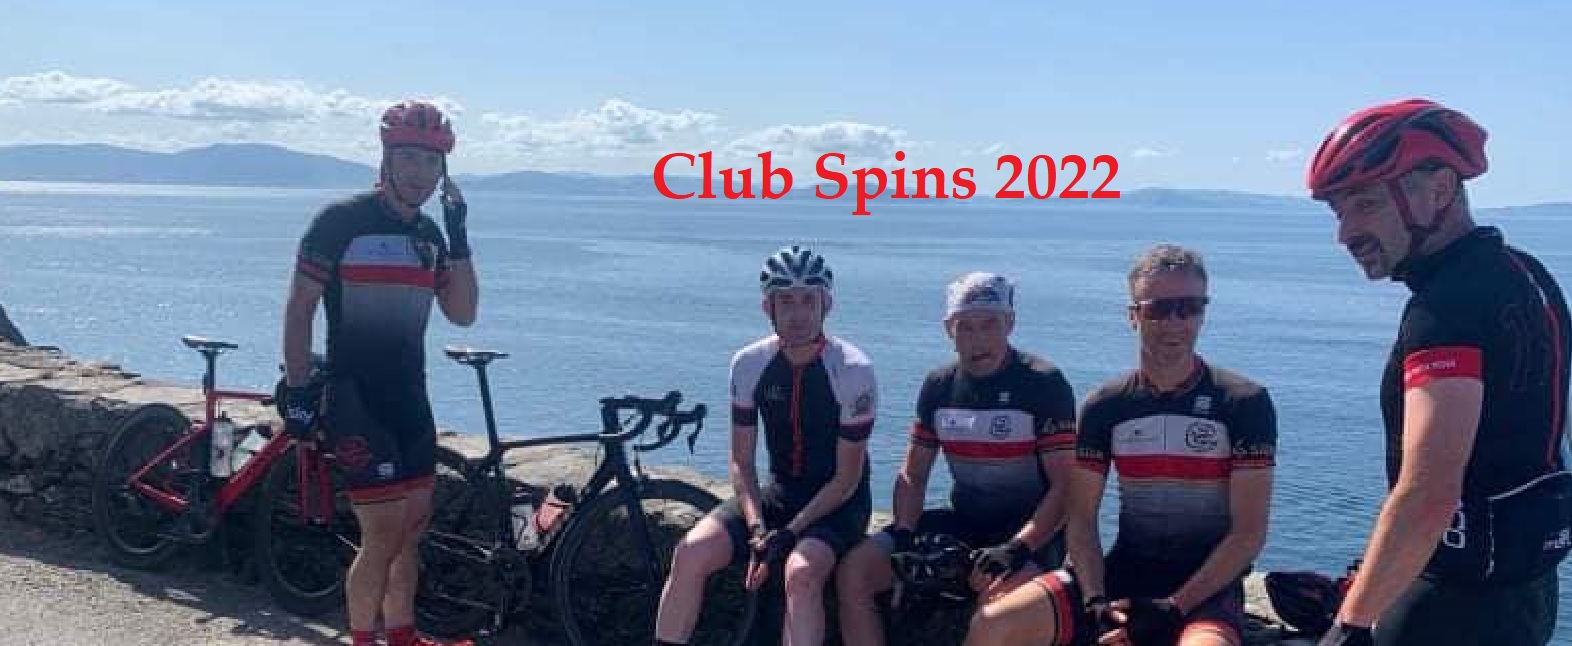 CLUB SPINS 2022 August